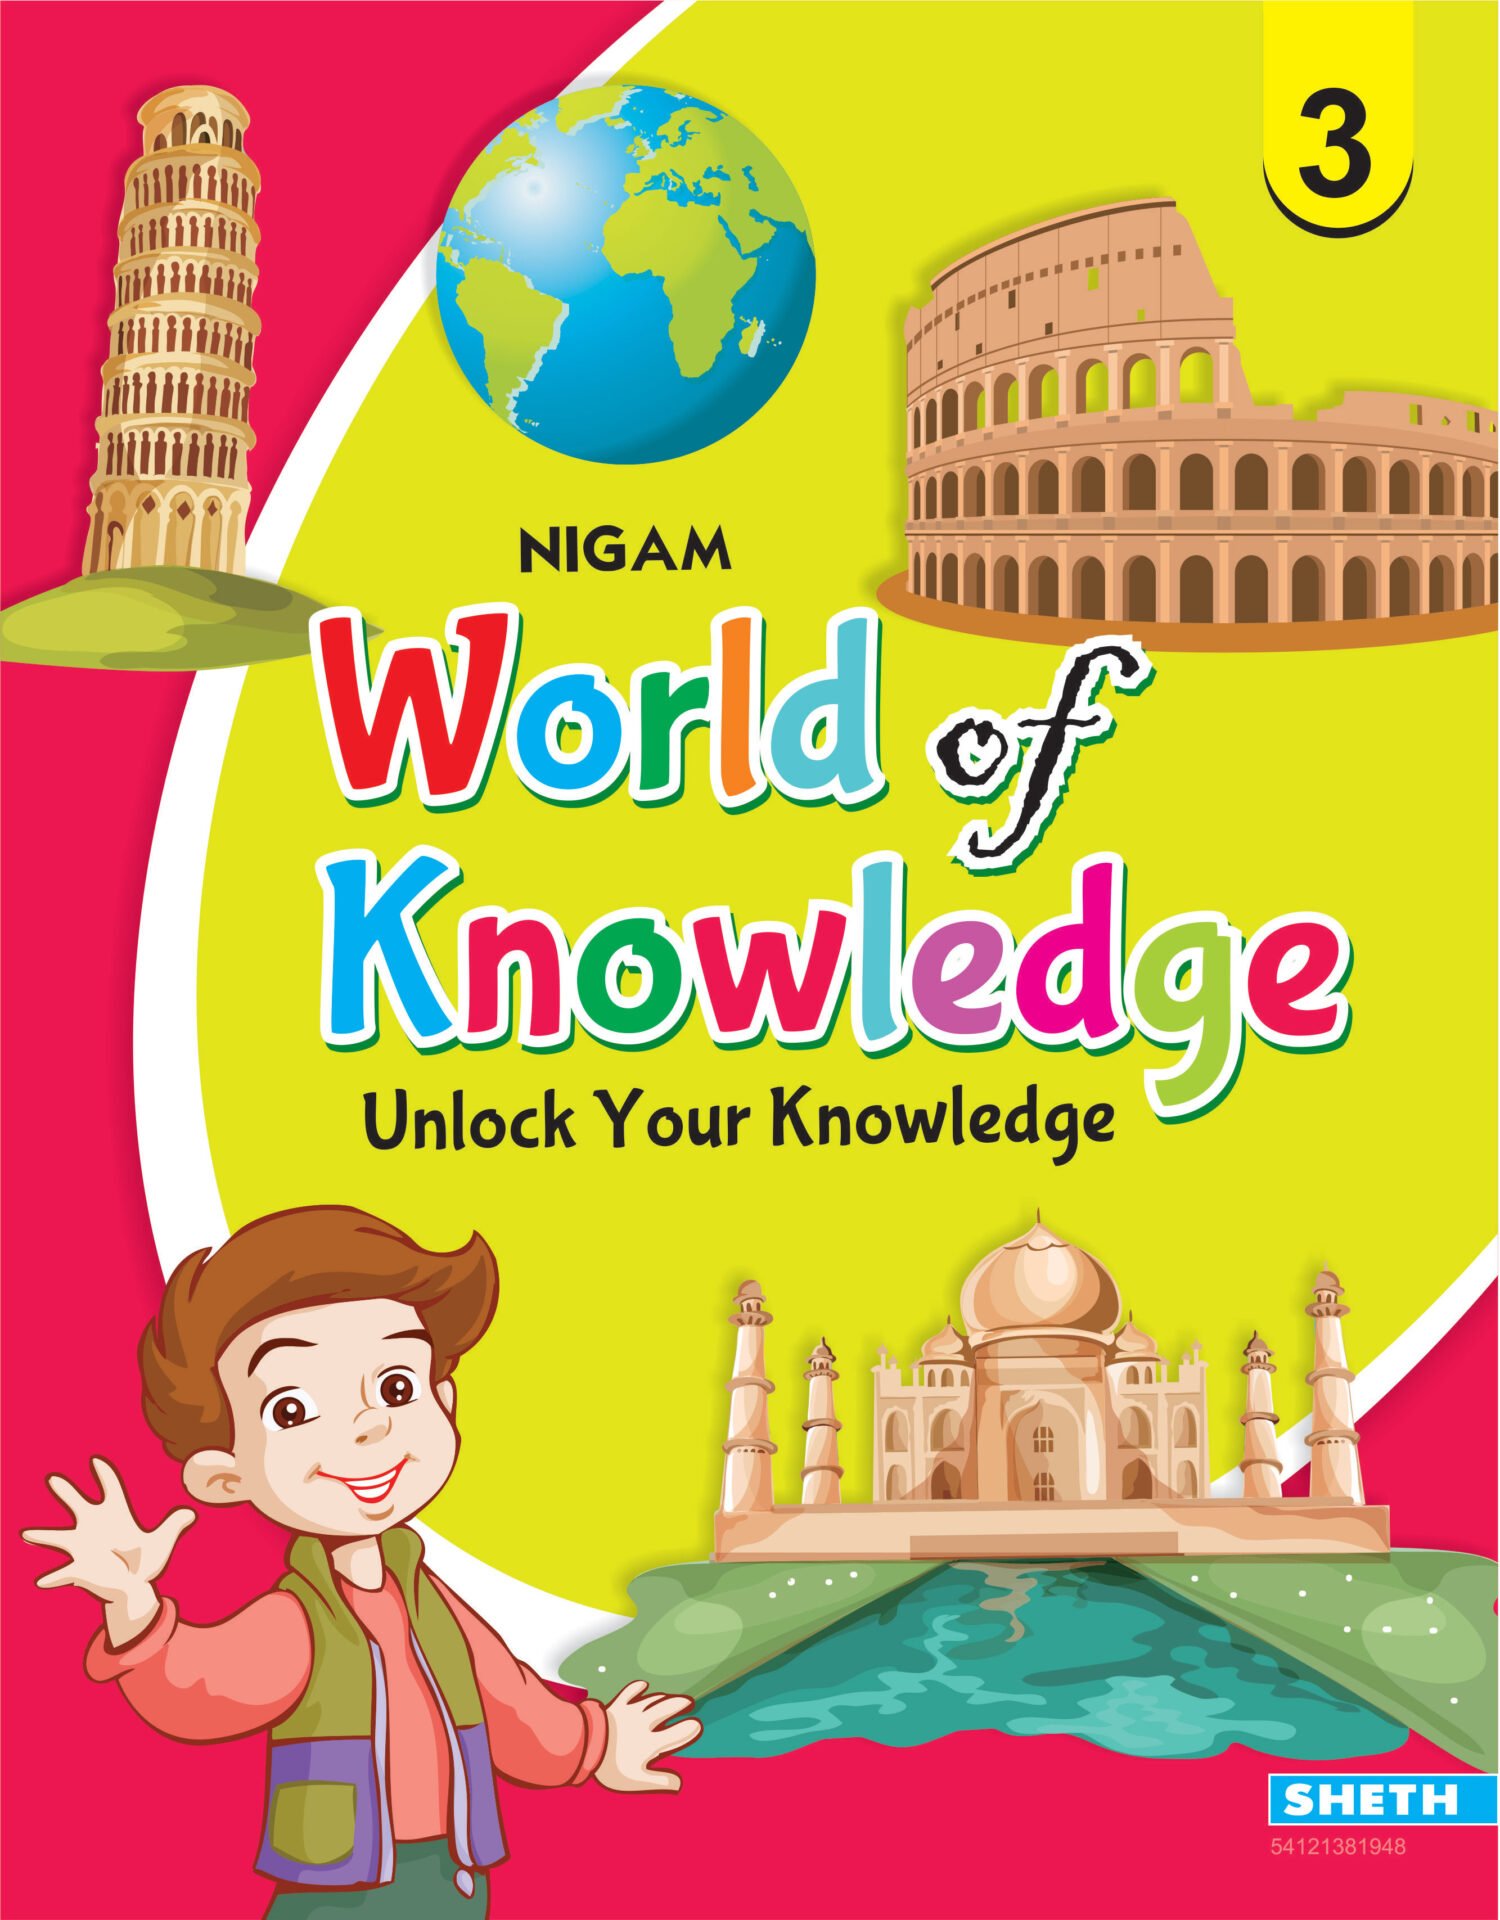 Nigam World of Knowledge 3 1 1